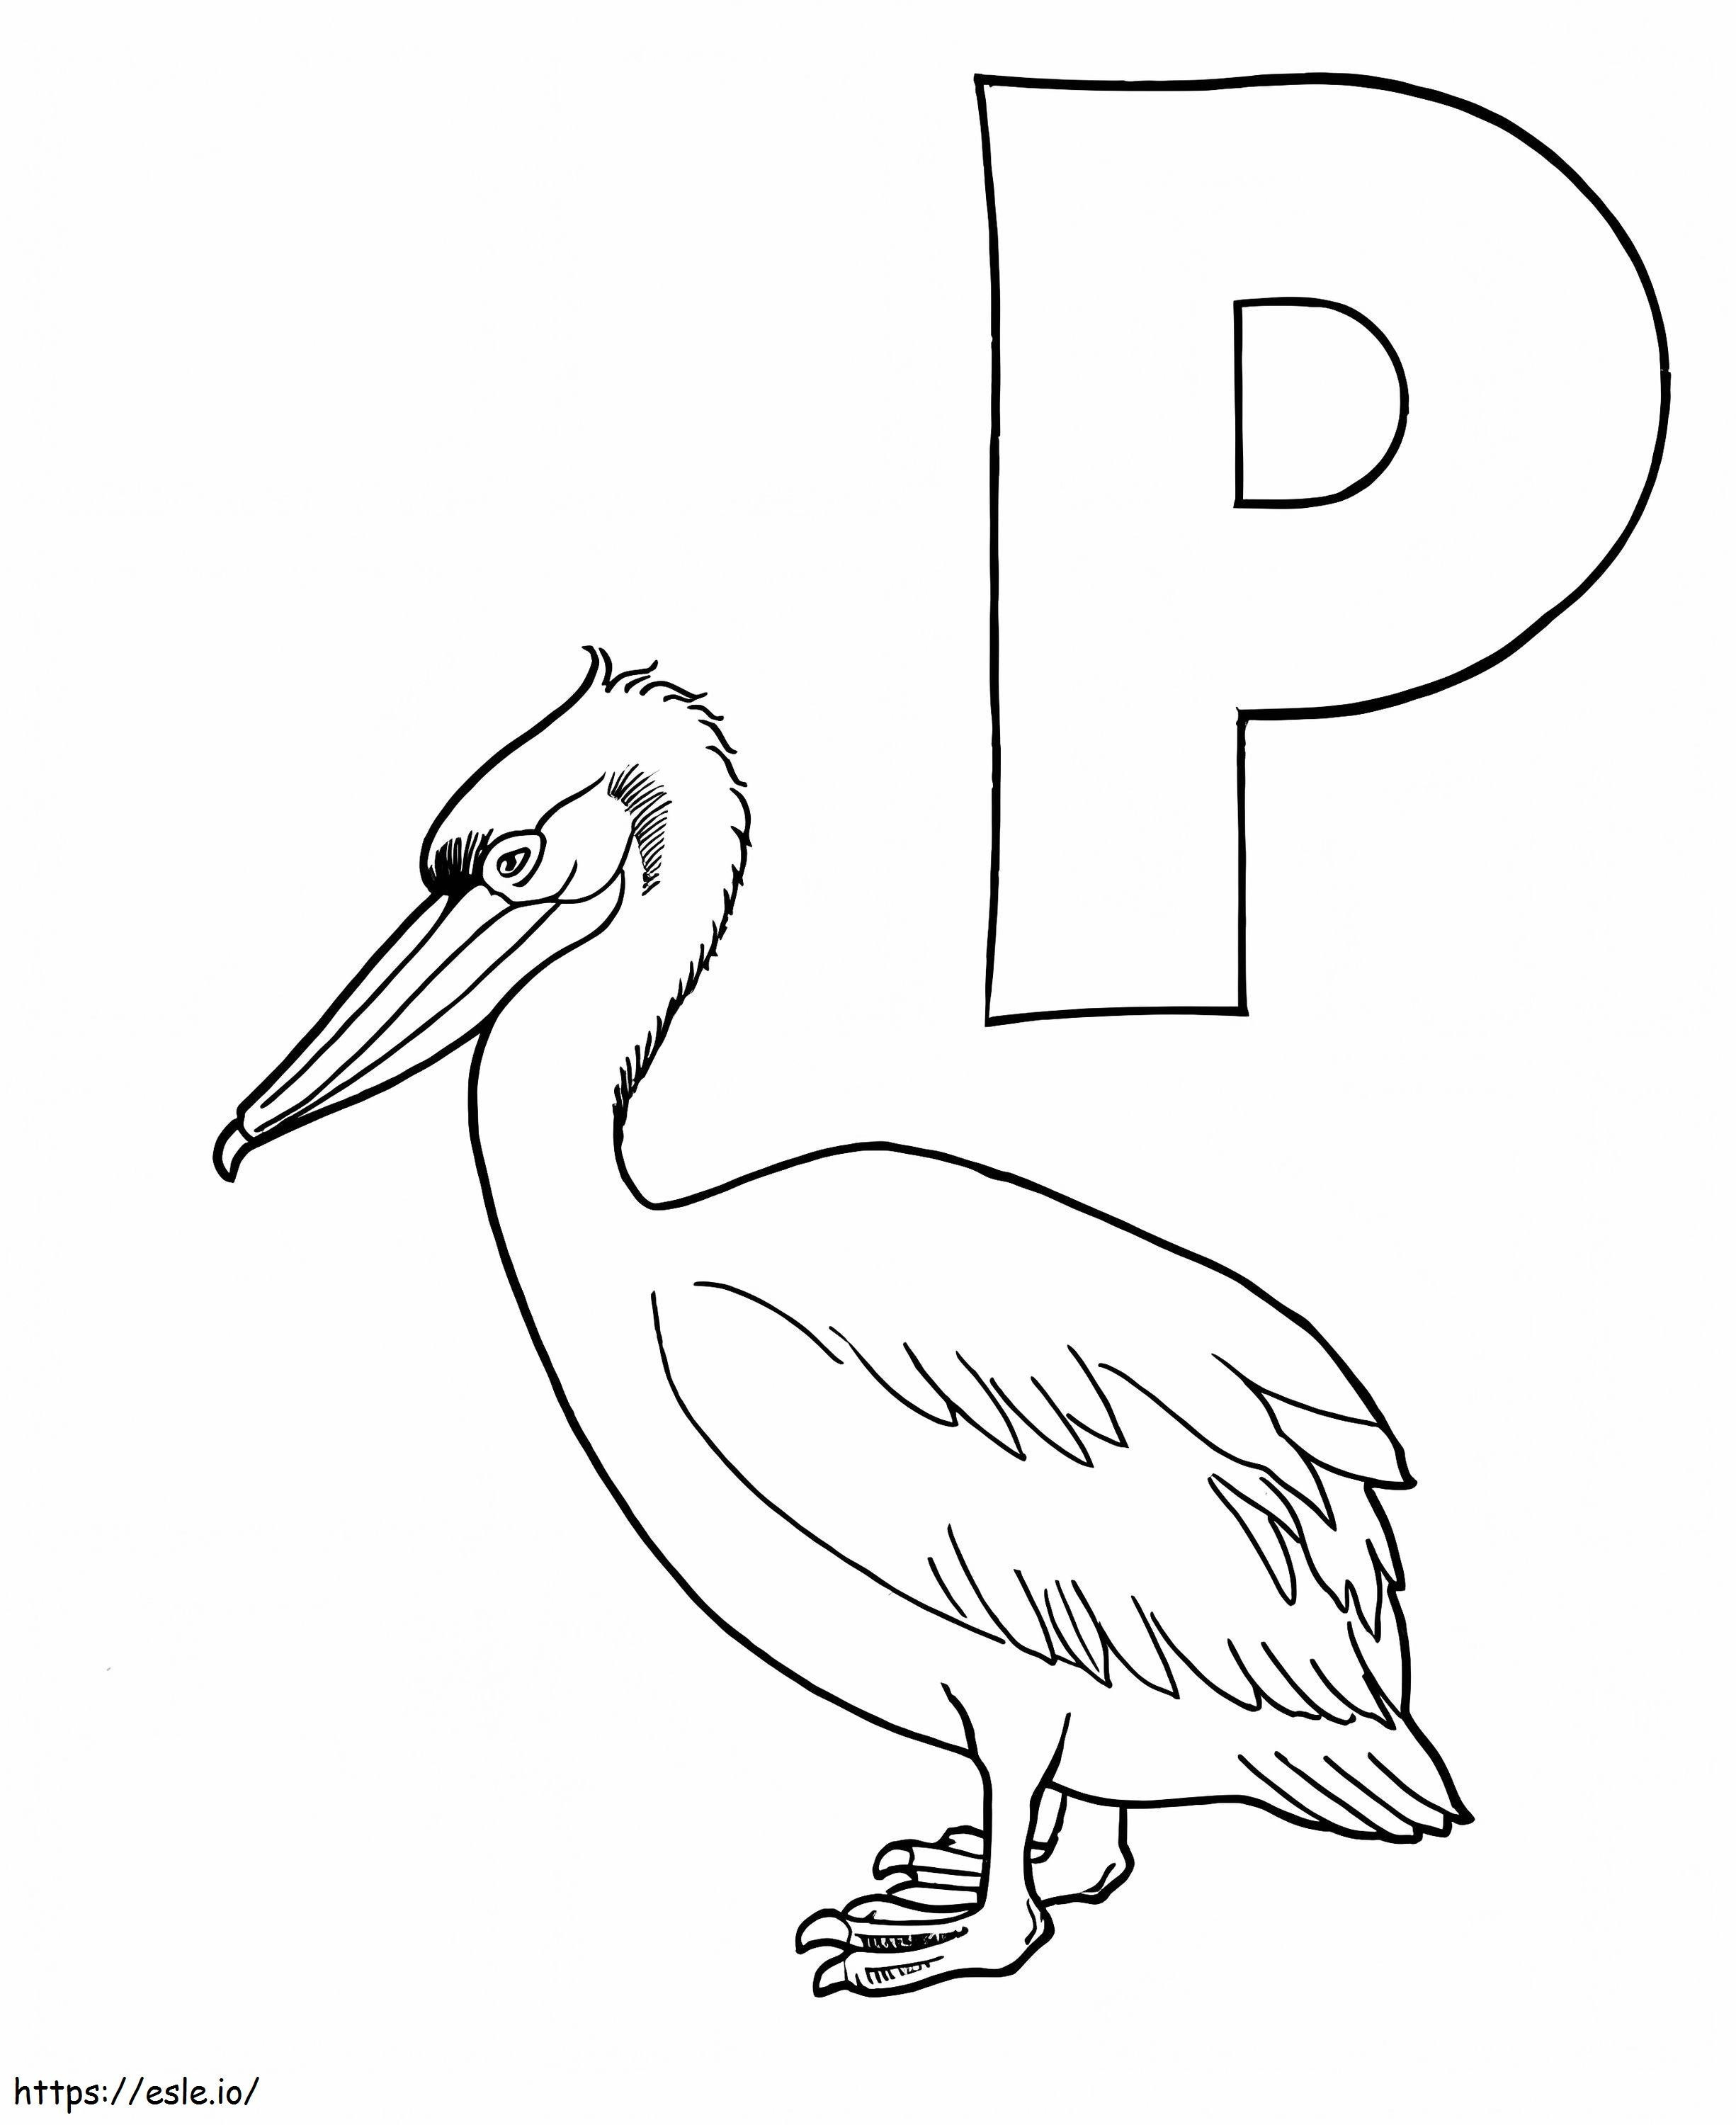 Pelicano e letra P para colorir